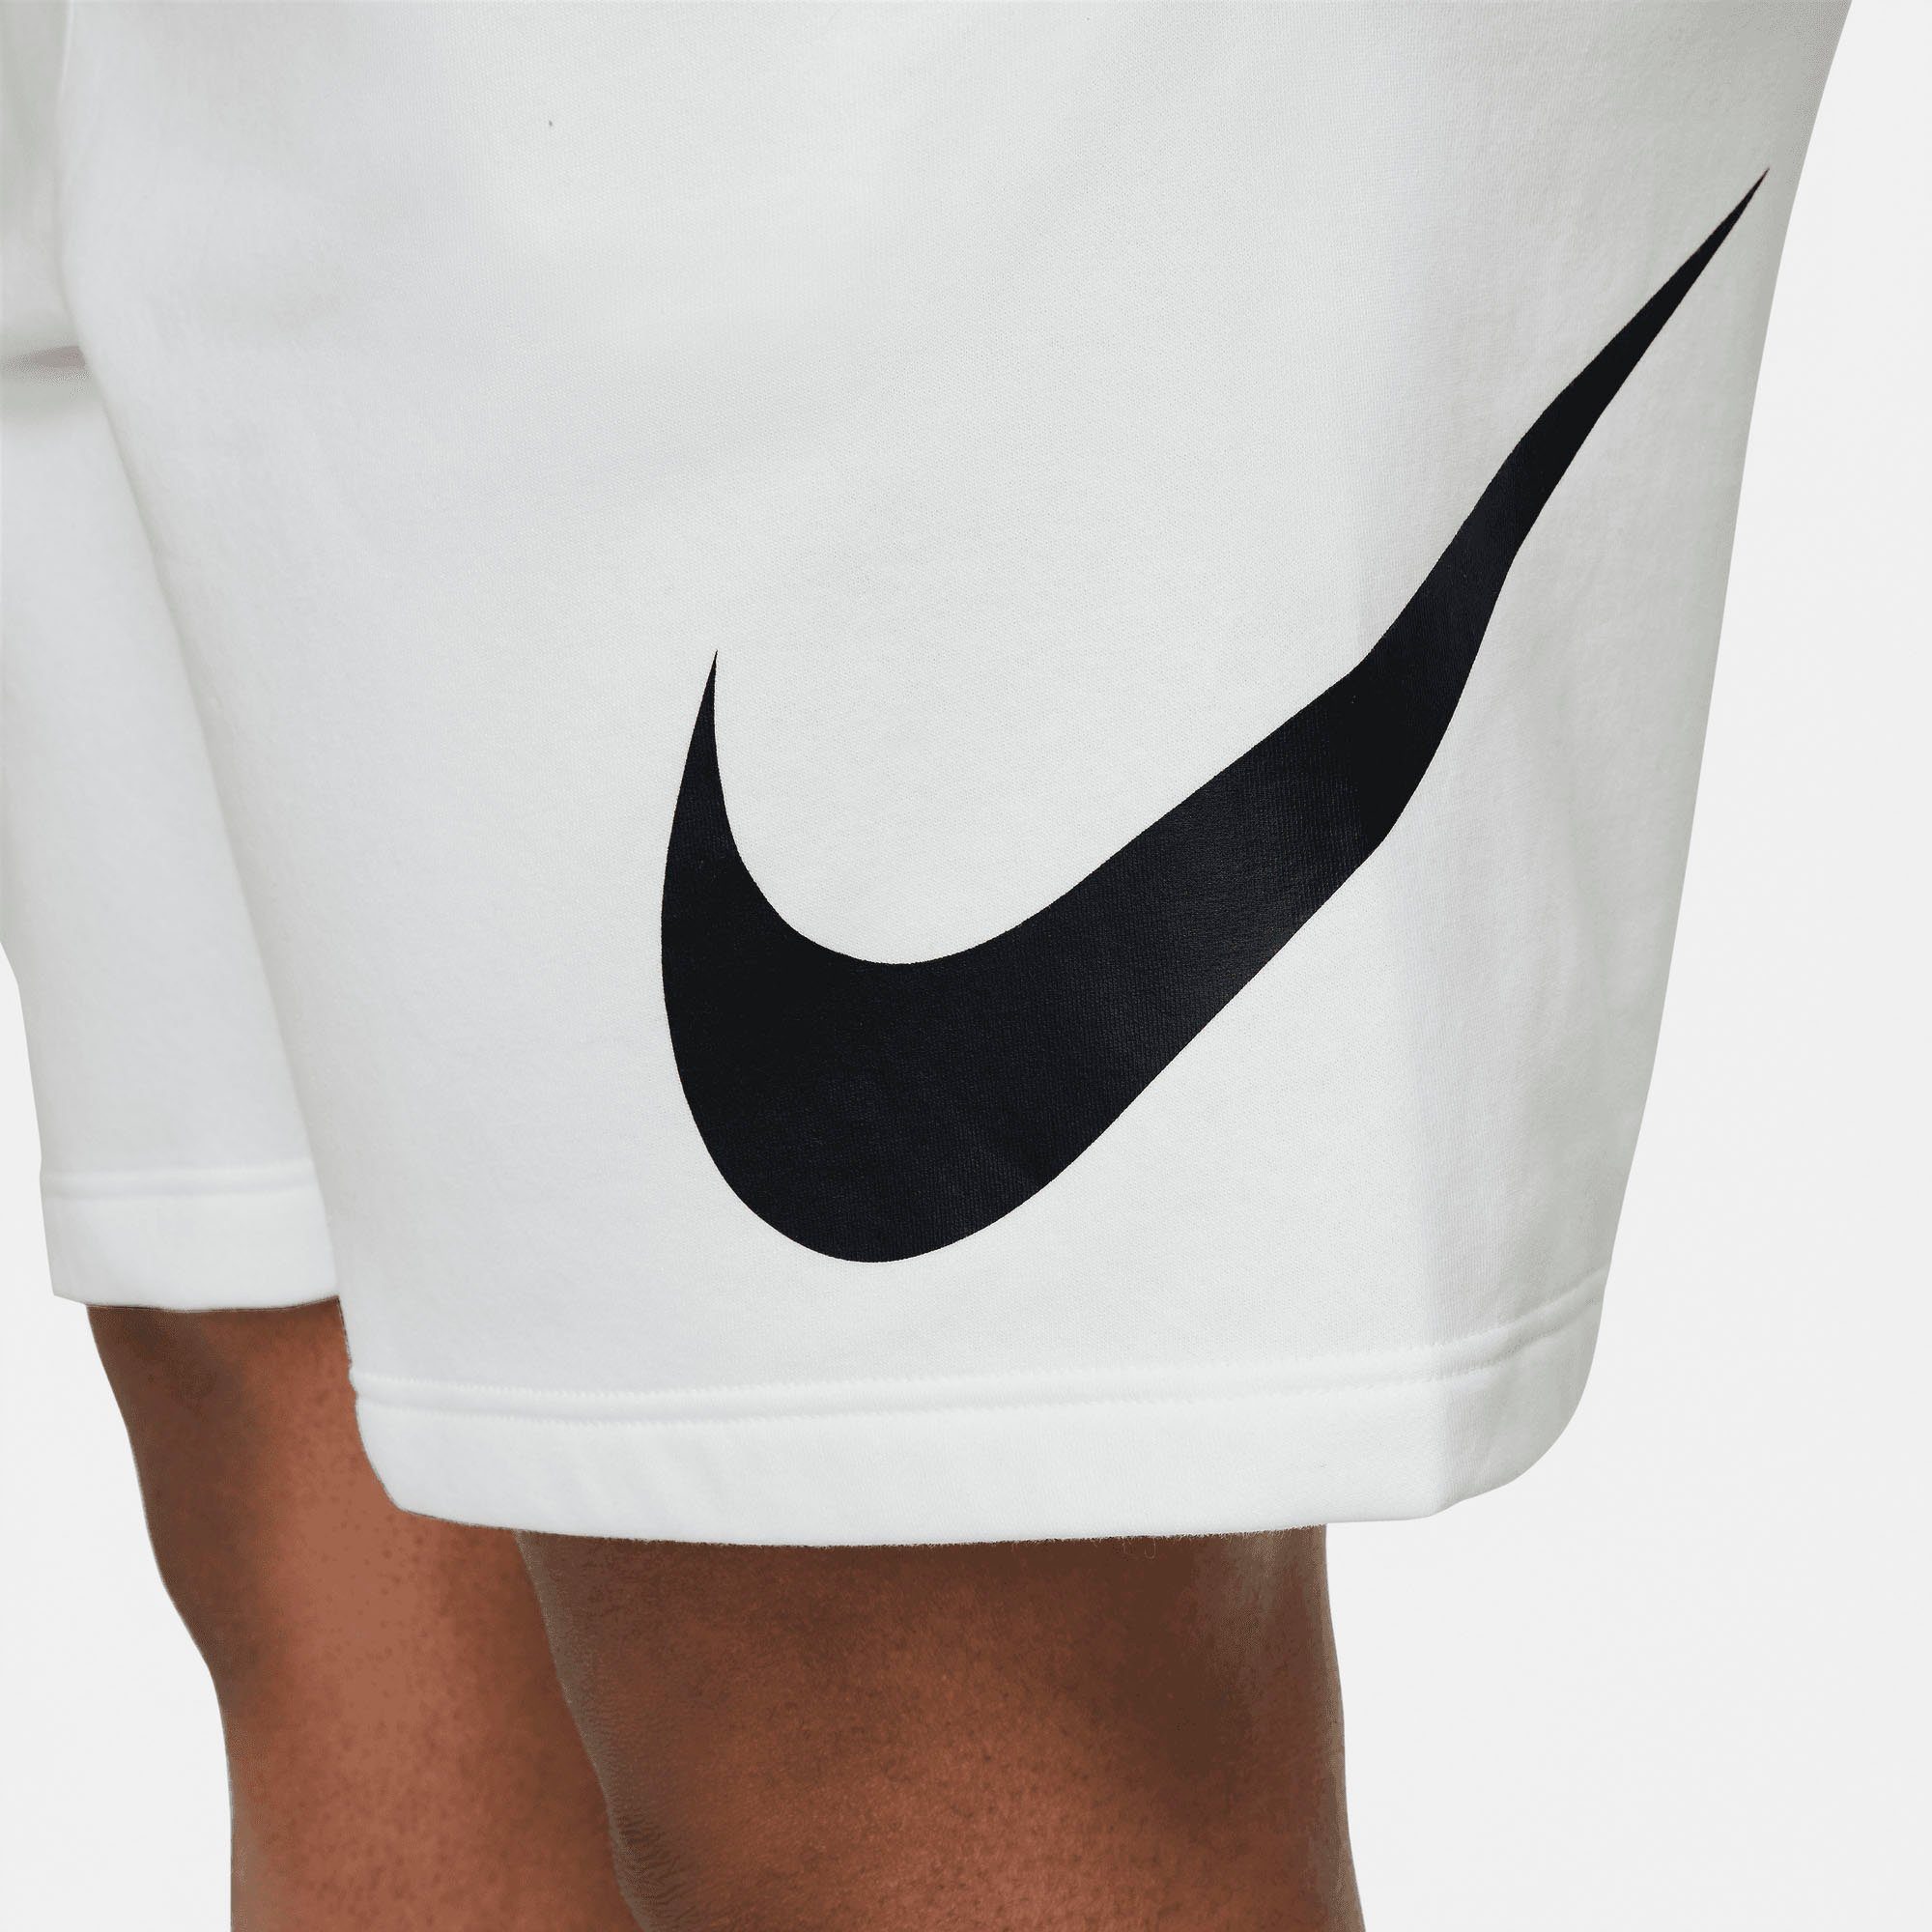 Nike weiß Sportswear SHORTS CLUB MEN'S GRAPHIC Shorts